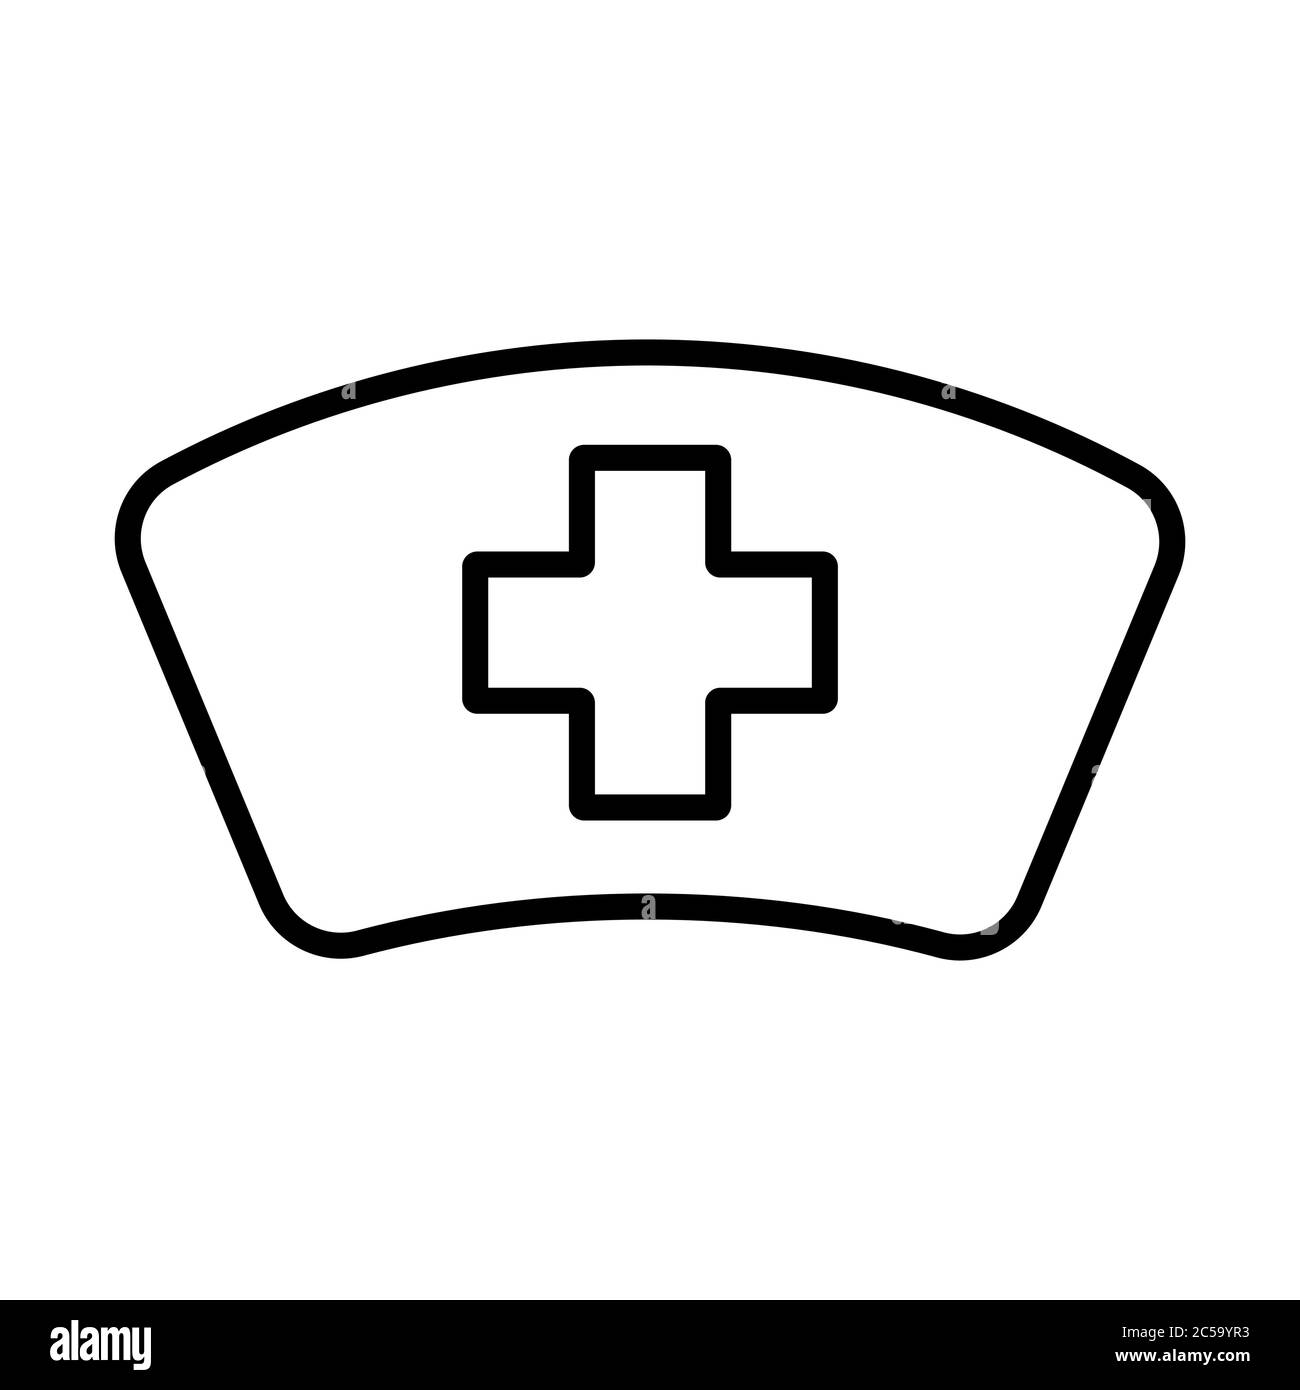 https://c8.alamy.com/comp/2C59YR3/nurse-hat-vector-icon-medicine-and-healthcare-medical-support-sign-graph-symbol-for-medical-web-site-and-apps-design-logo-app-ui-2C59YR3.jpg